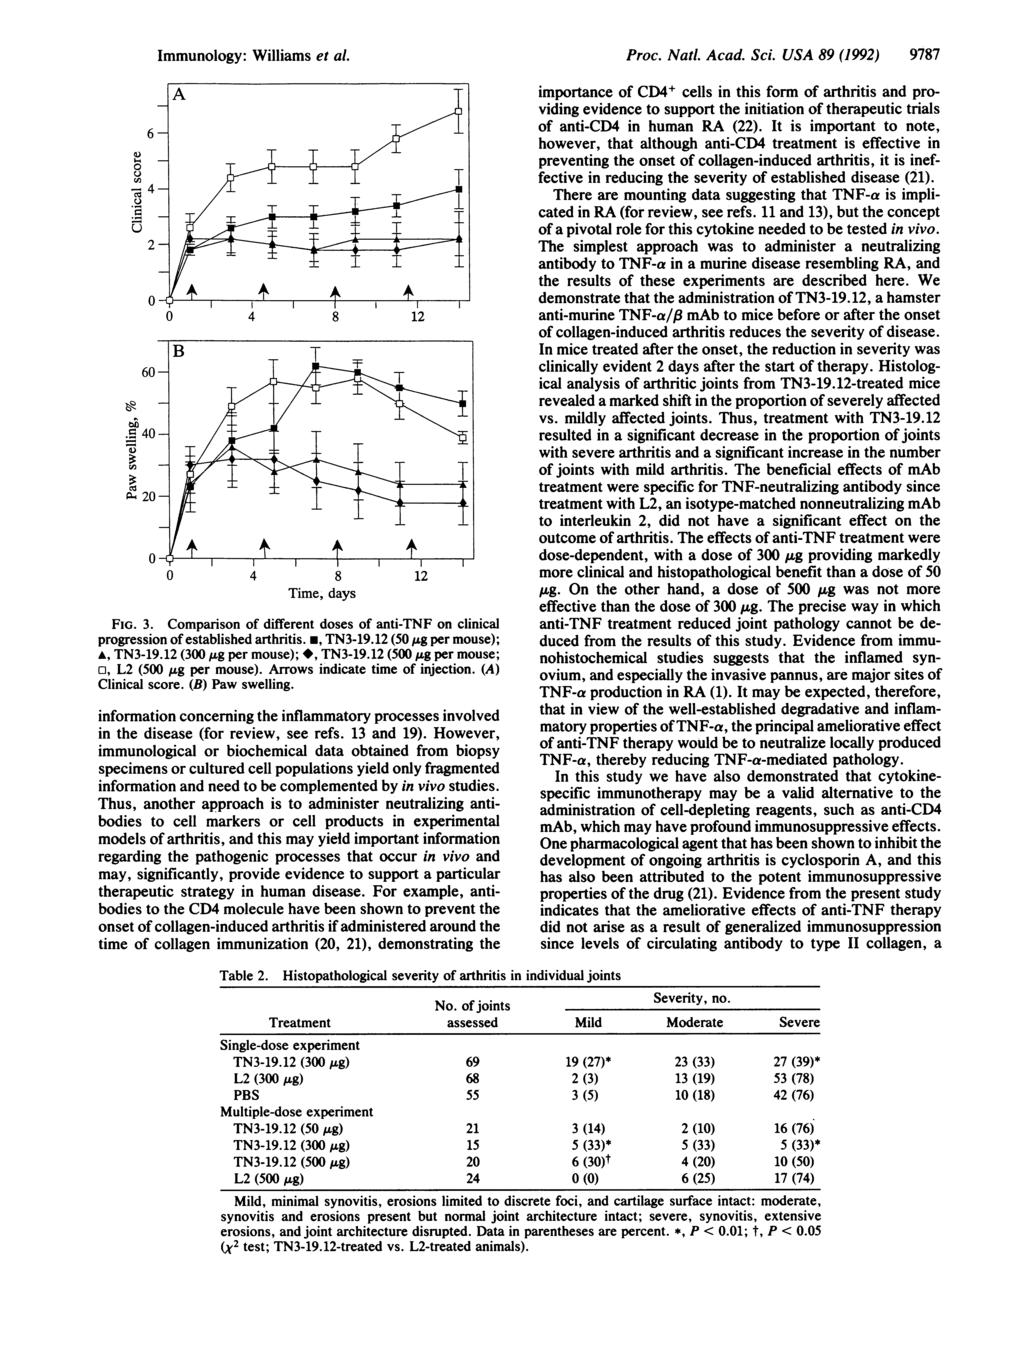 Immunology: Williams et al. Proc. Natl. Acad. Sci. USA 89 (1992) 9787 0a $A 0 6 - CZ 4._ 2 0 0 4 8 12 Time, days FIG. 3.